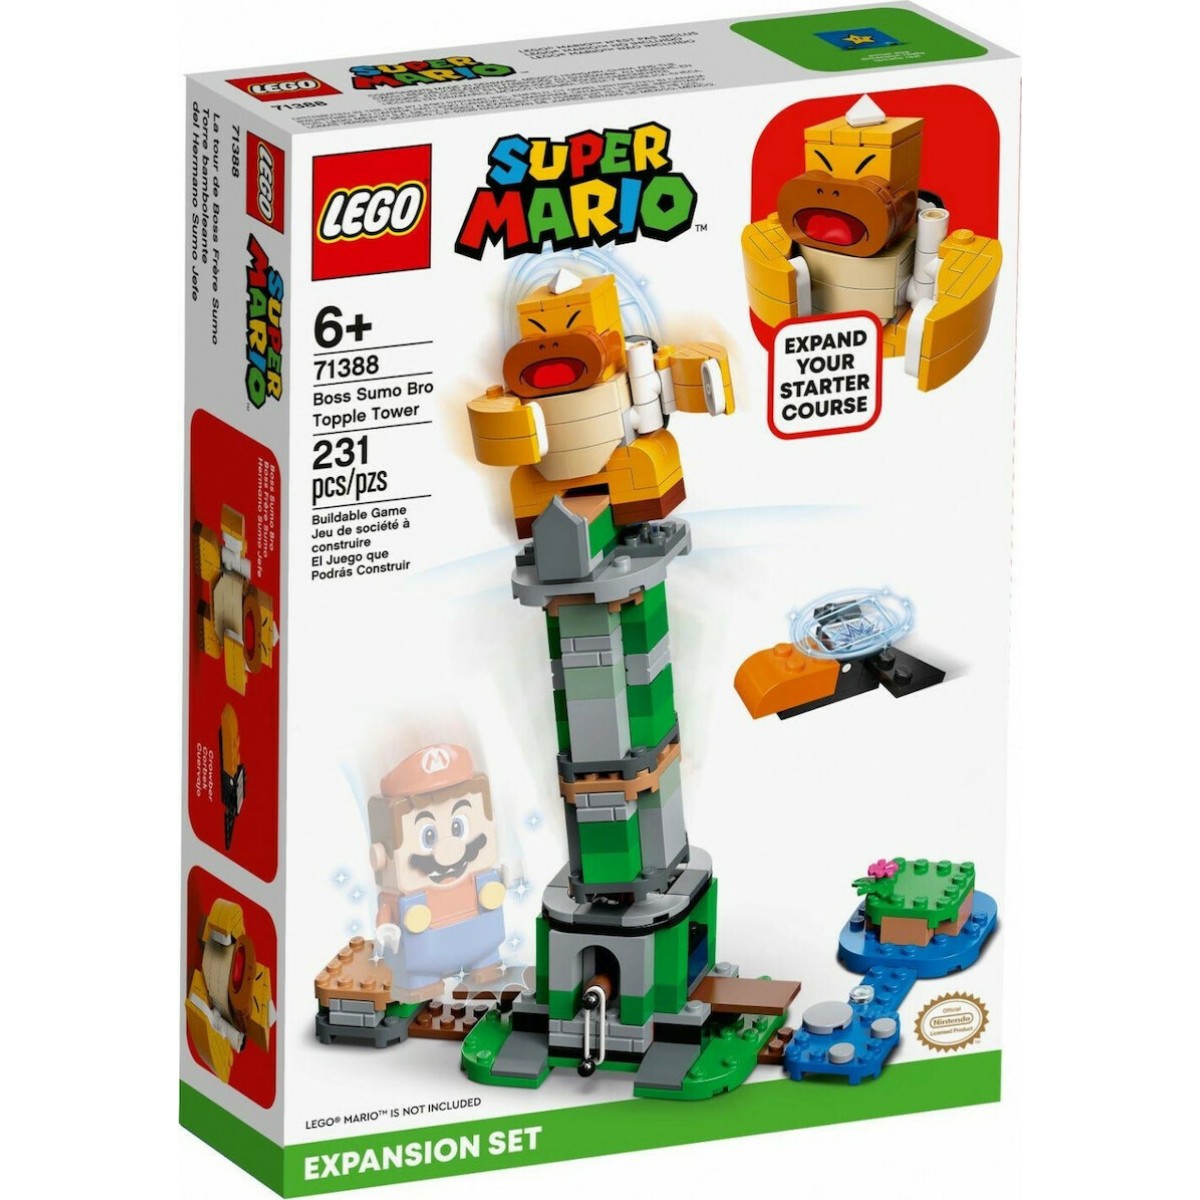 LEGO SUPER MARIO 71388 BOSS SUMO BRO TOPPLE TOWER EXPANSION SET